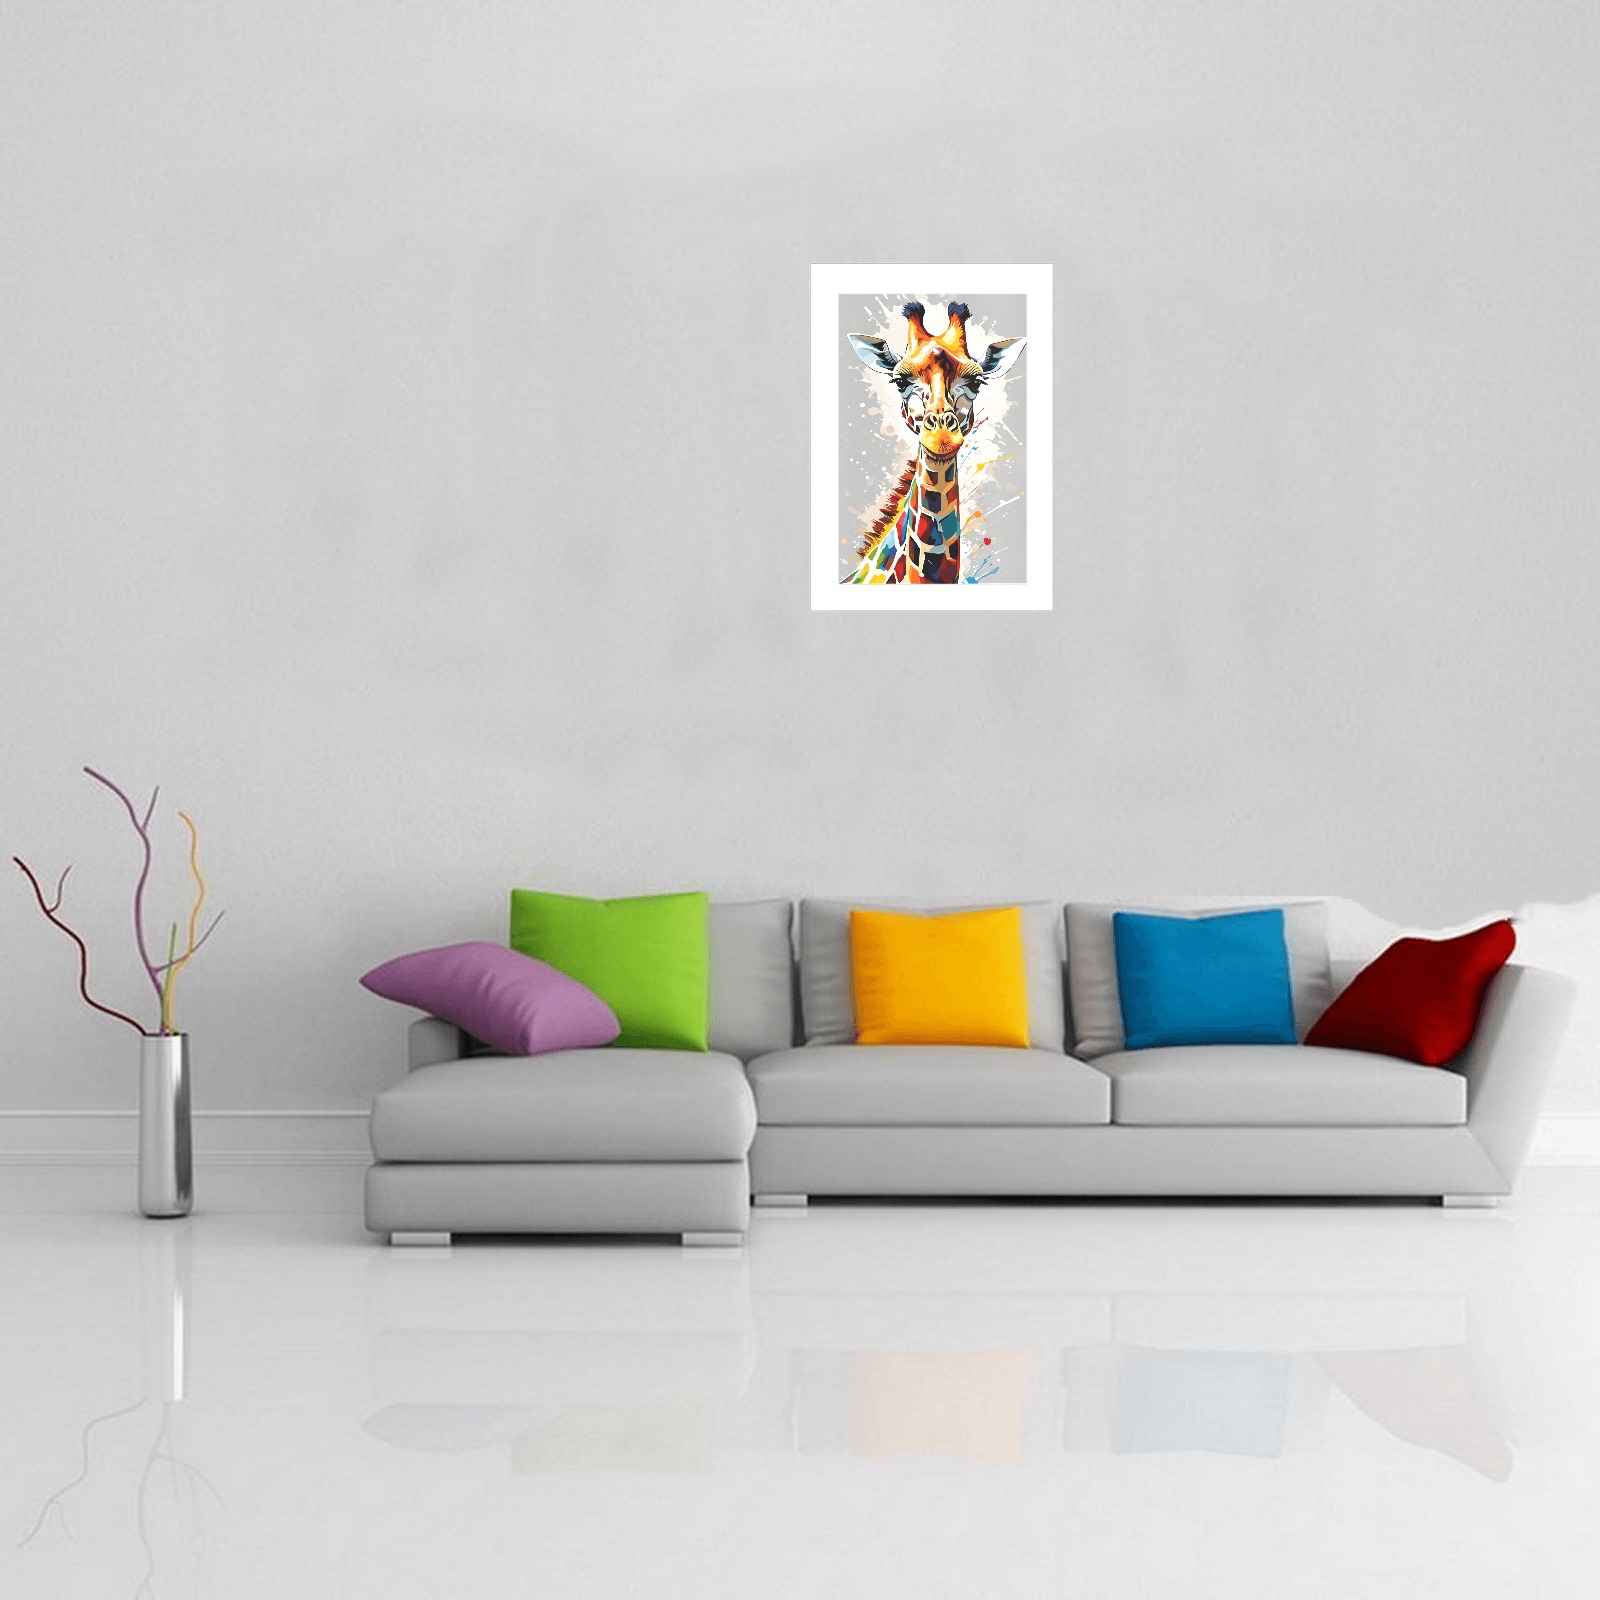 Charming giraffe animal, nice colorful fantasy art Art Print 19‘’x28‘’